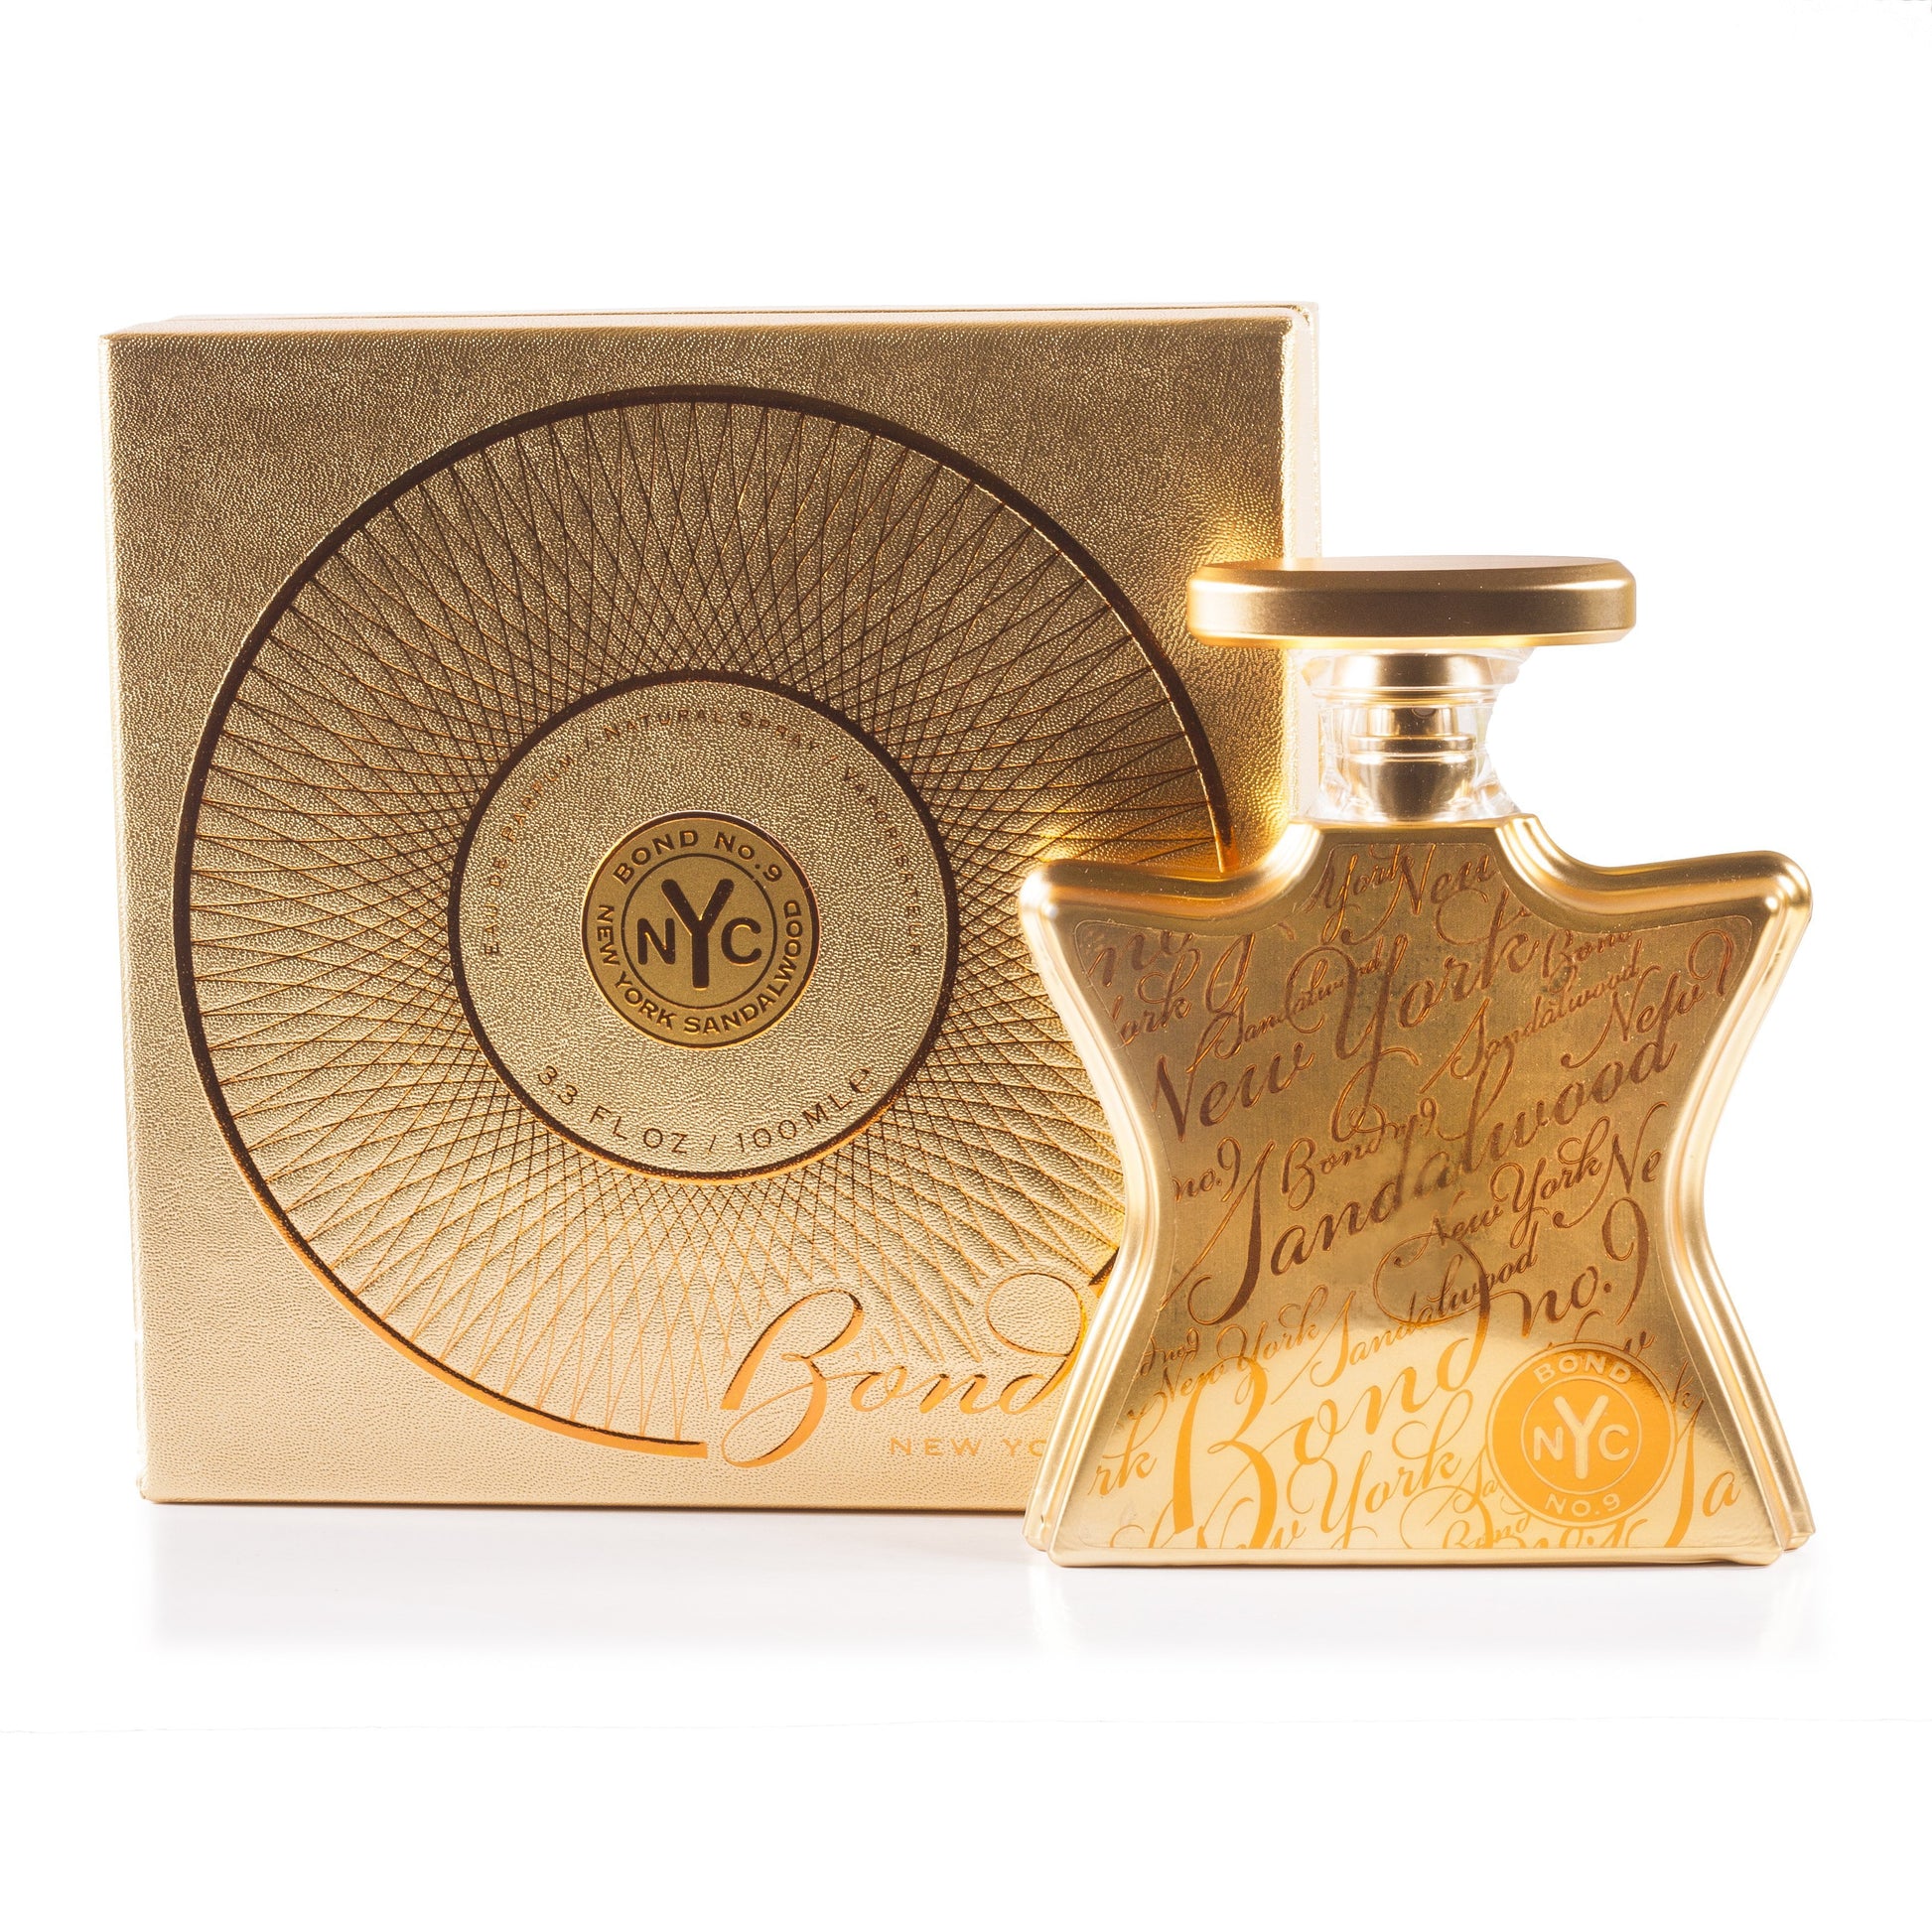 New York Sandalwood Eau de Parfum Spray for Women and Men by Bond No.9, Product image 1